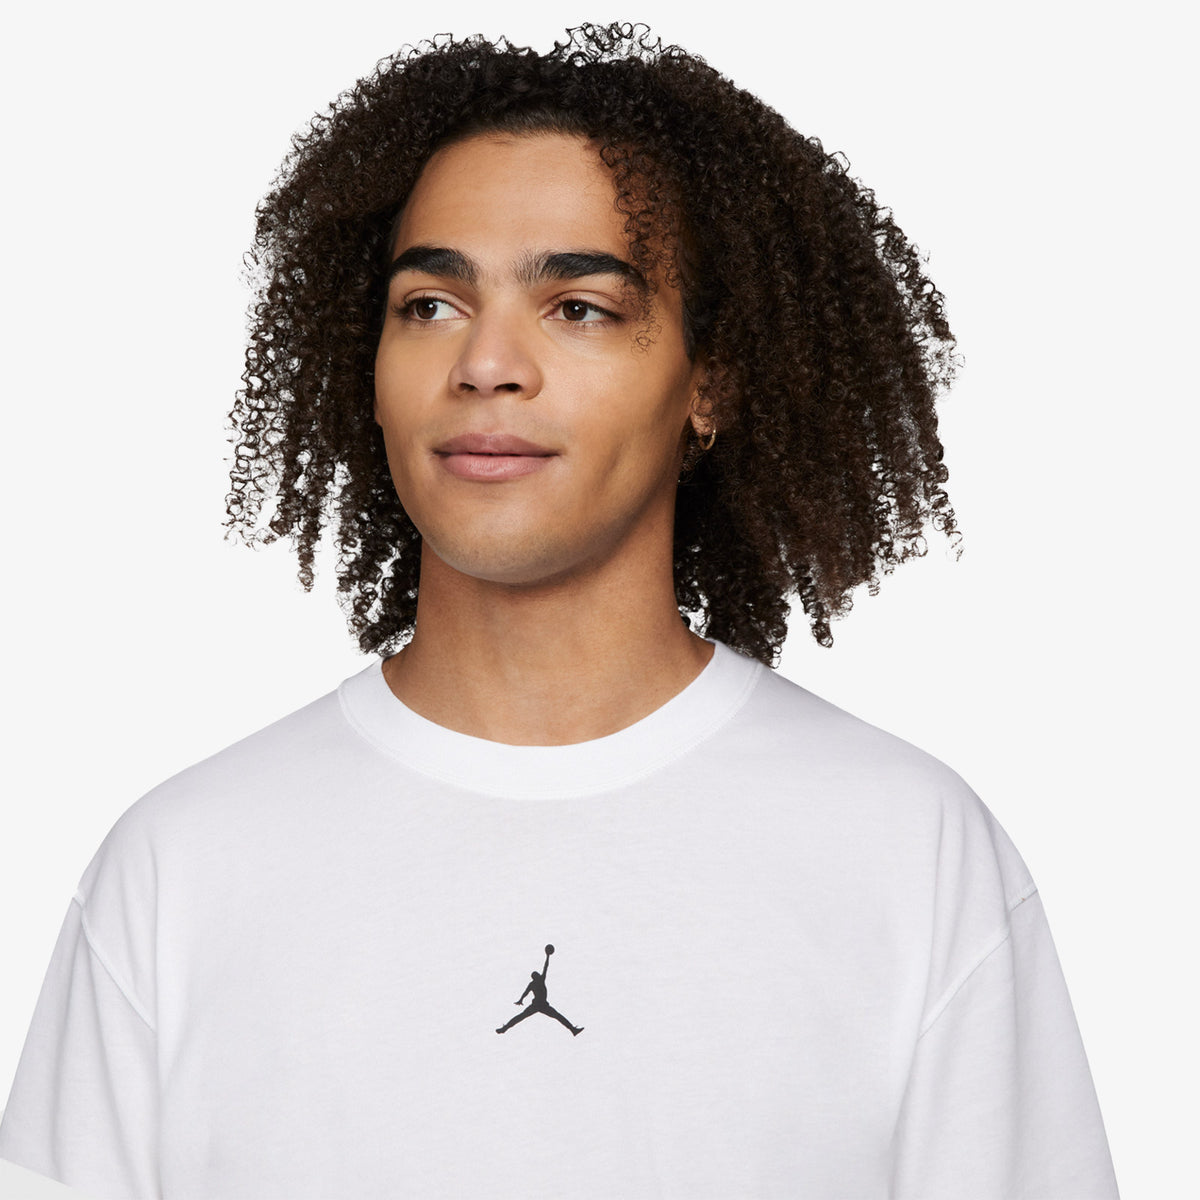 Jordan Sport Dri-FIT Air T-Shirt - White